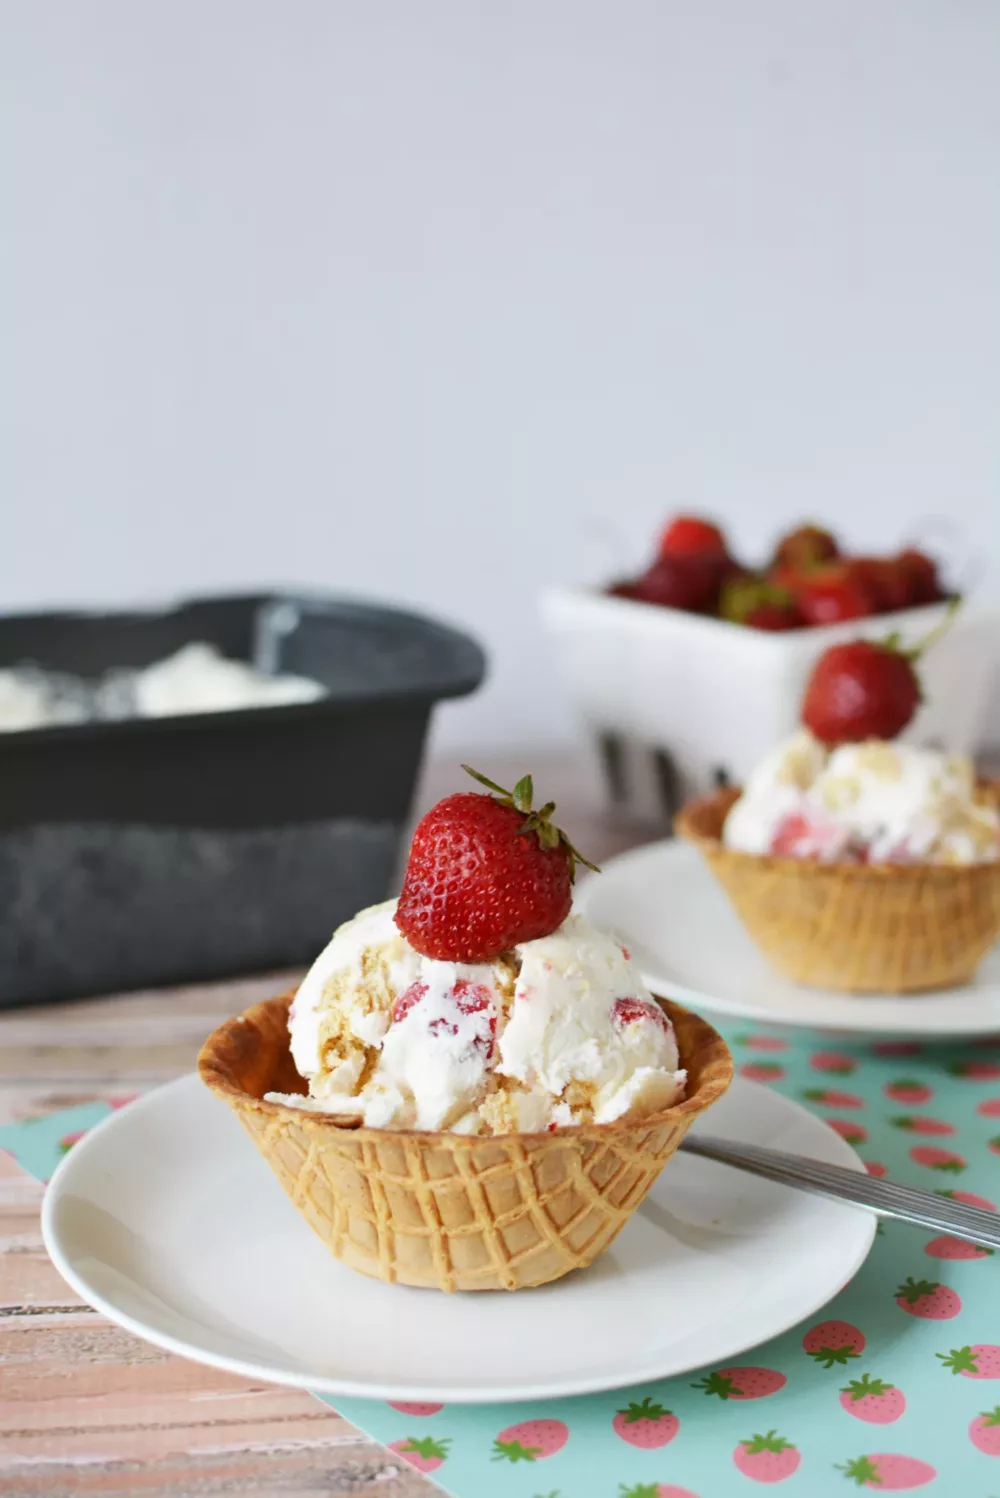 Strawberry Cheesecake Ice Cream in waffle cone bowls